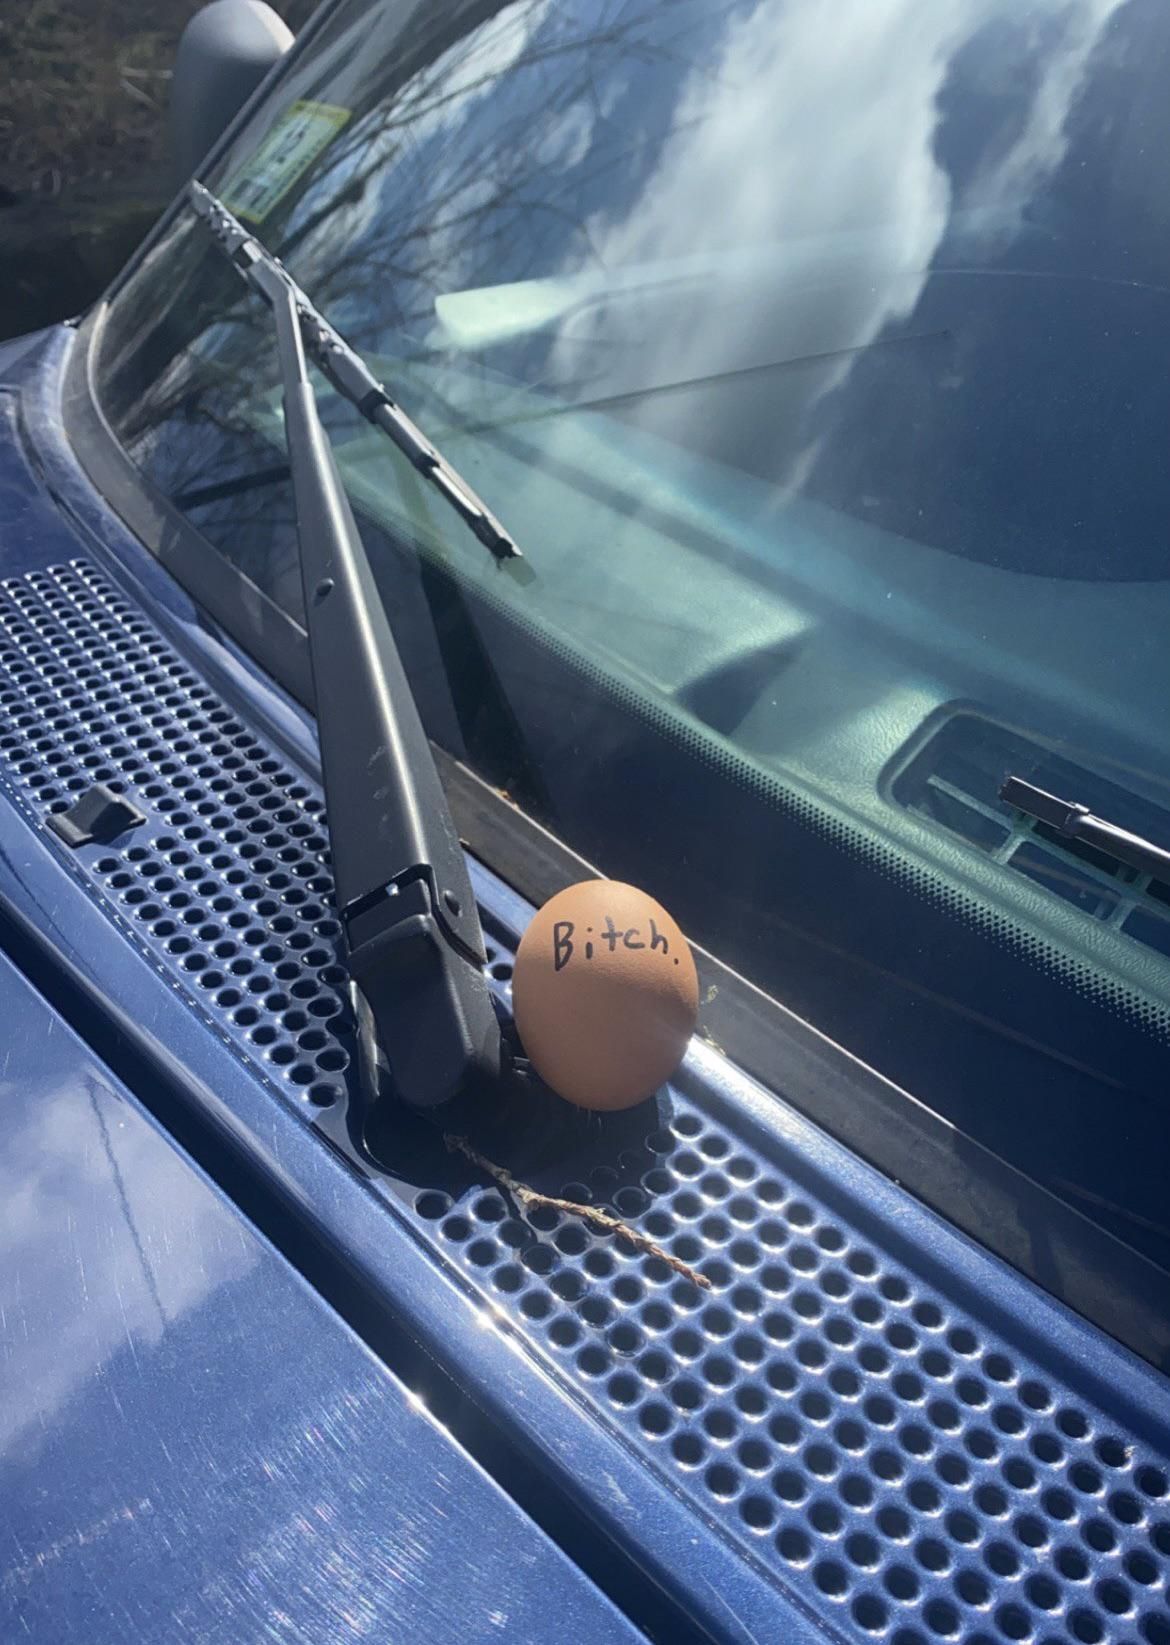 My friend egg’d my windshield